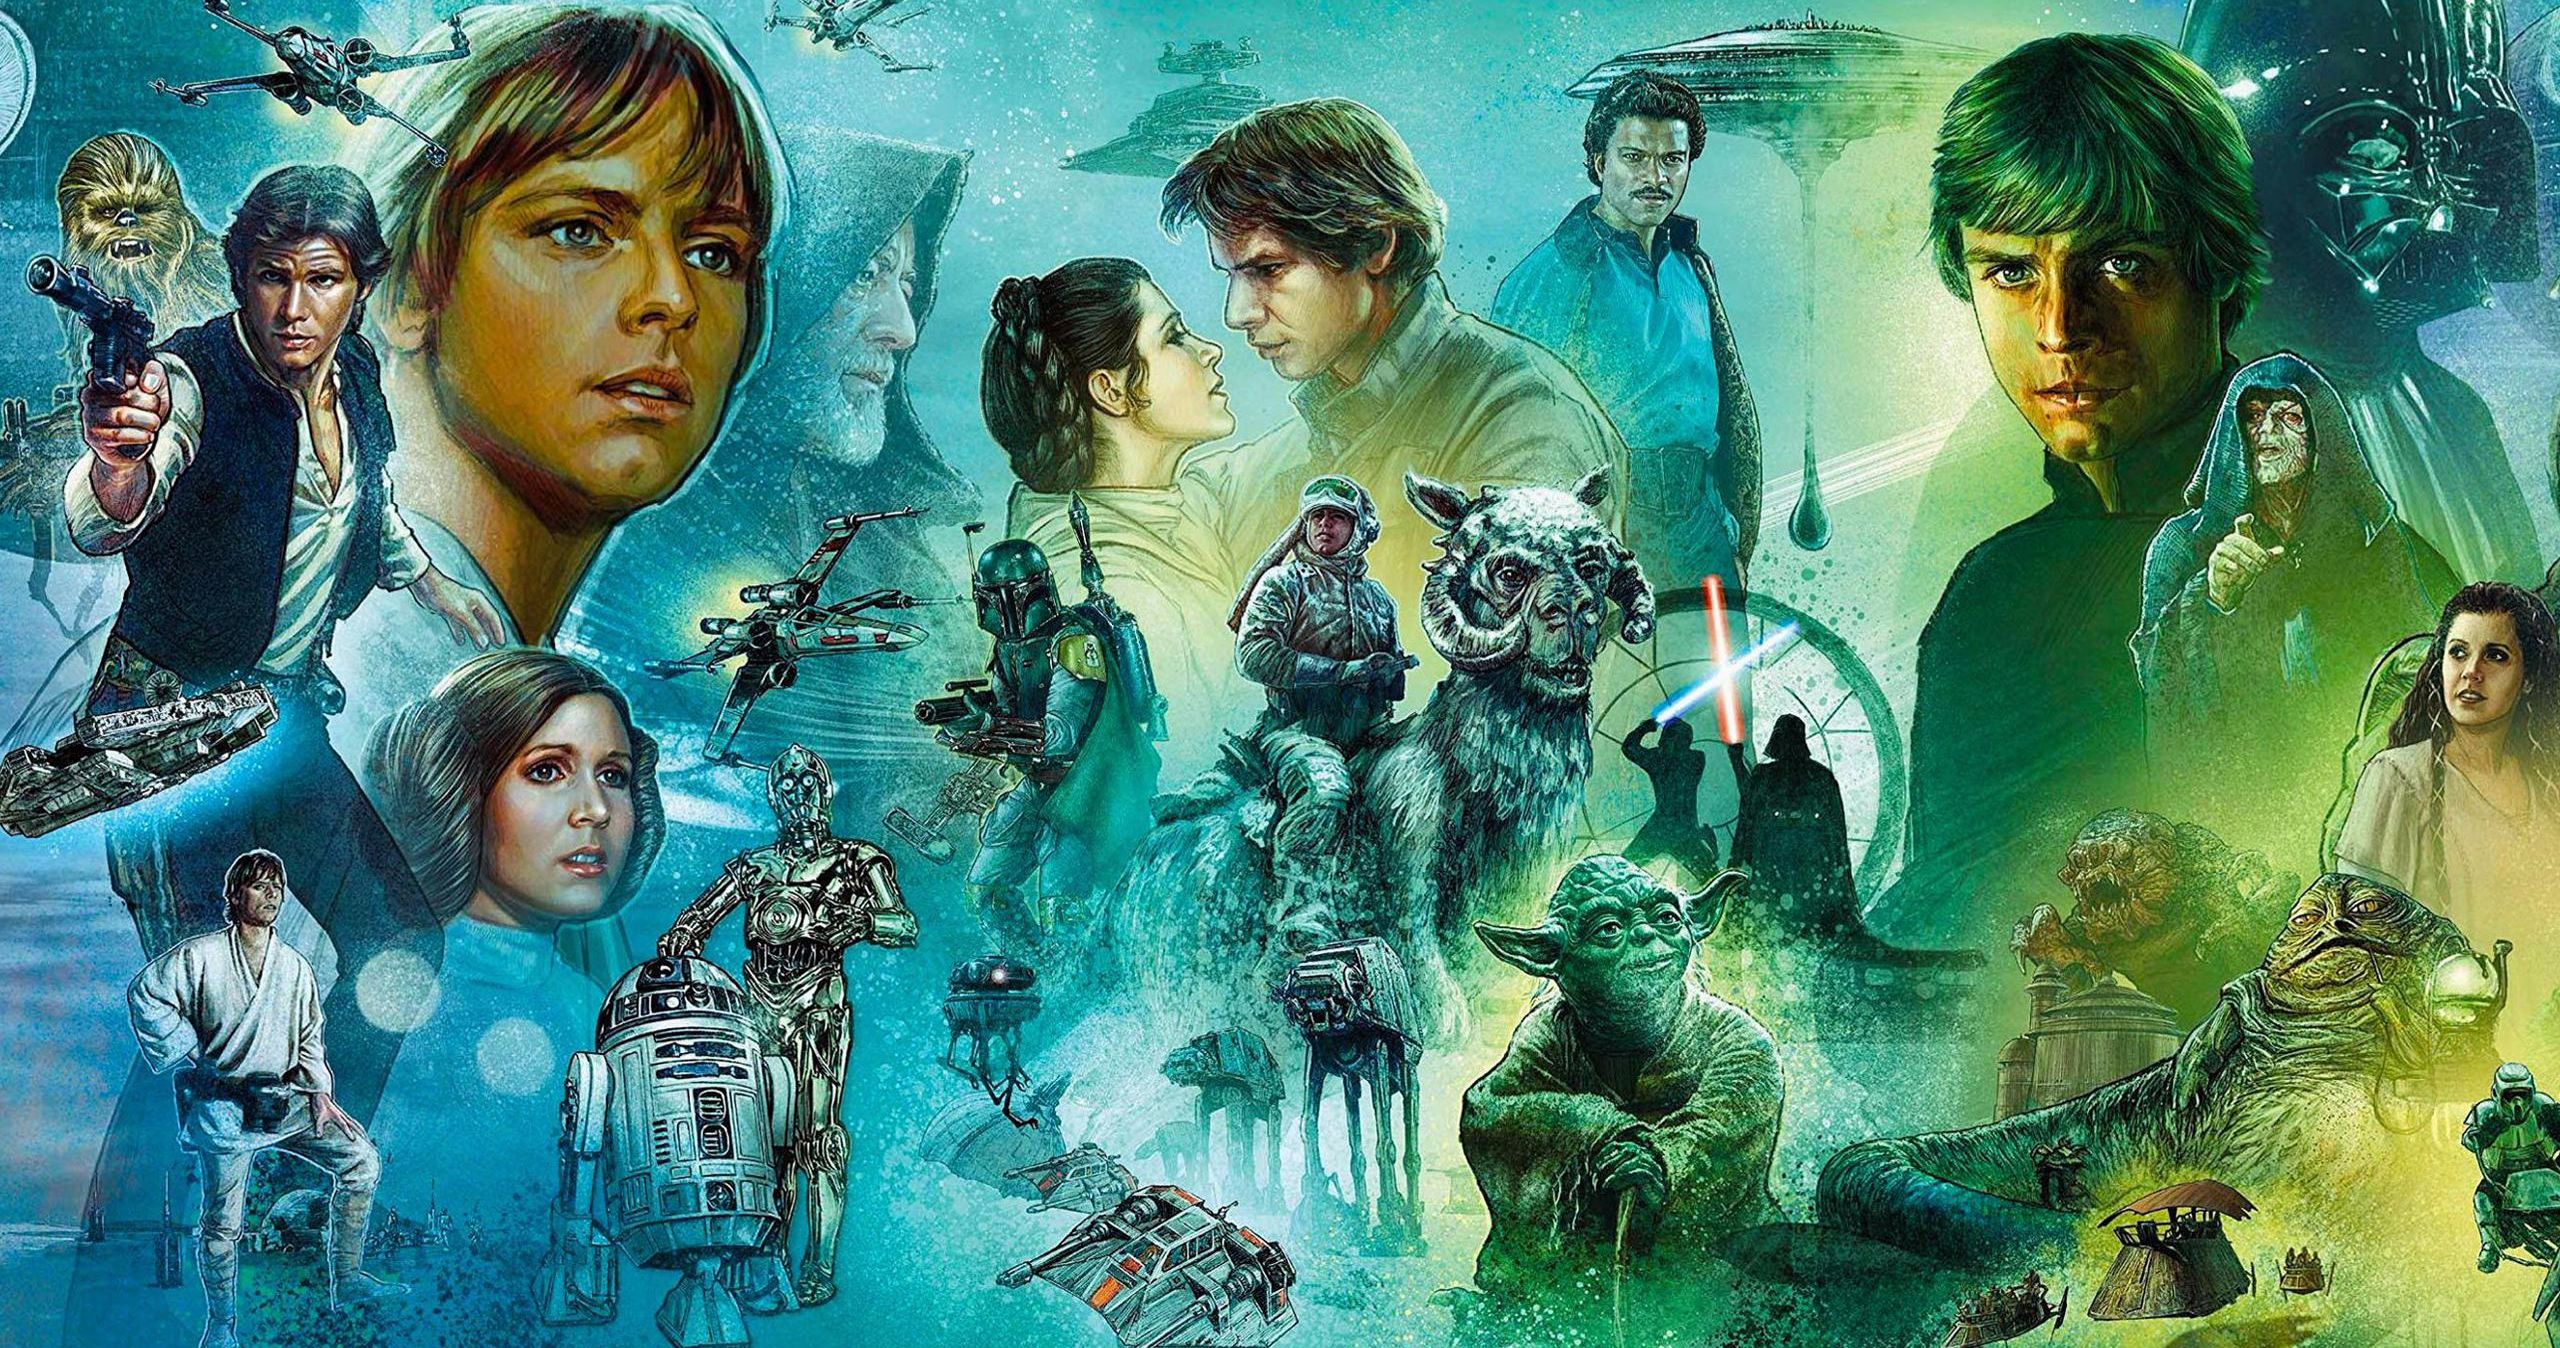 Entire Star Wars Skywalker Saga Coming to 4K in 2020?